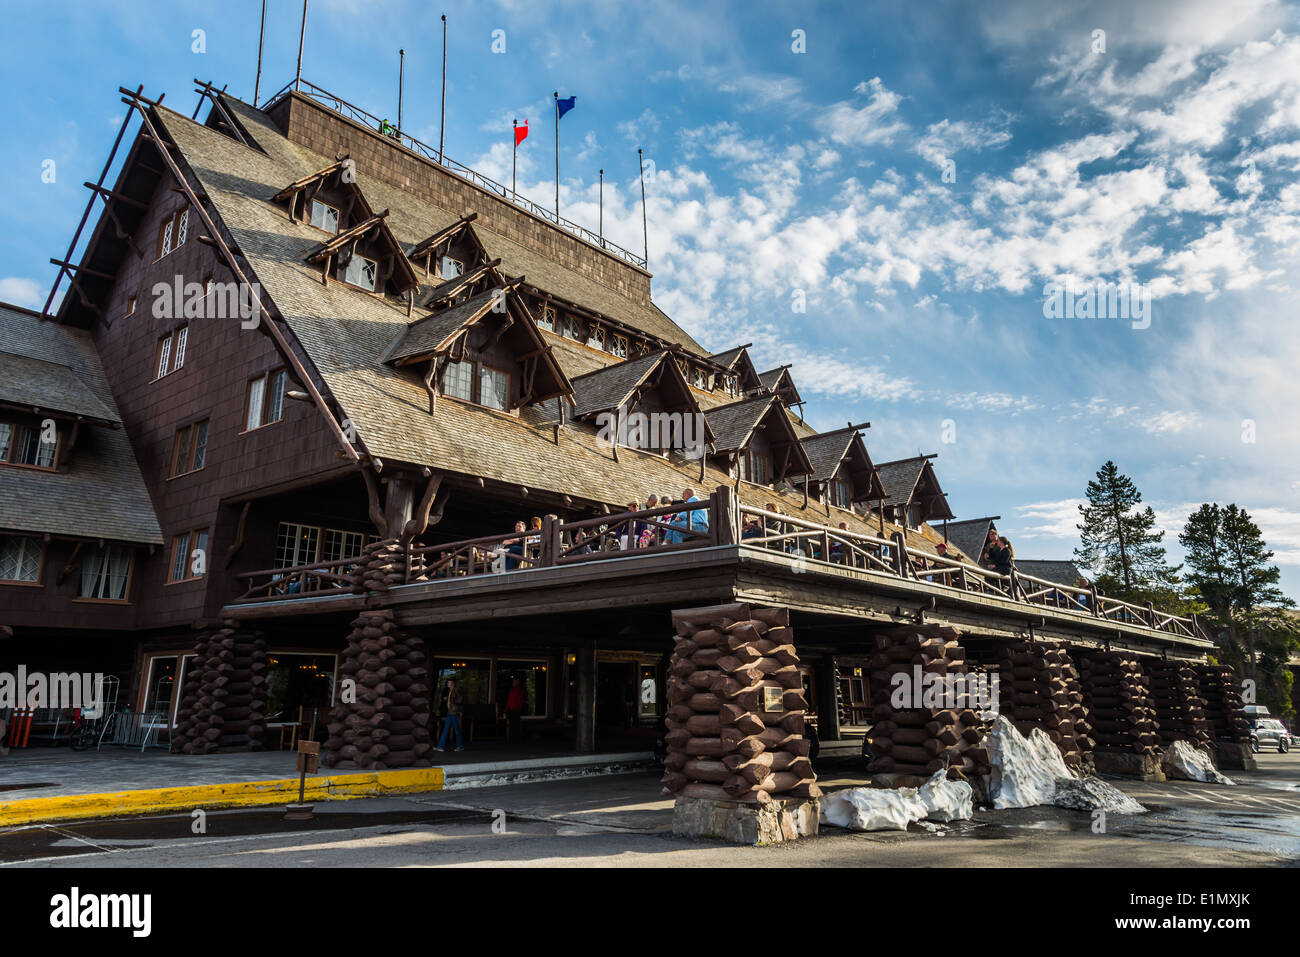 Inside the Old Faithful Lodge, Yellowstone National Park. Wyoming, USA  Stock Photo - Alamy